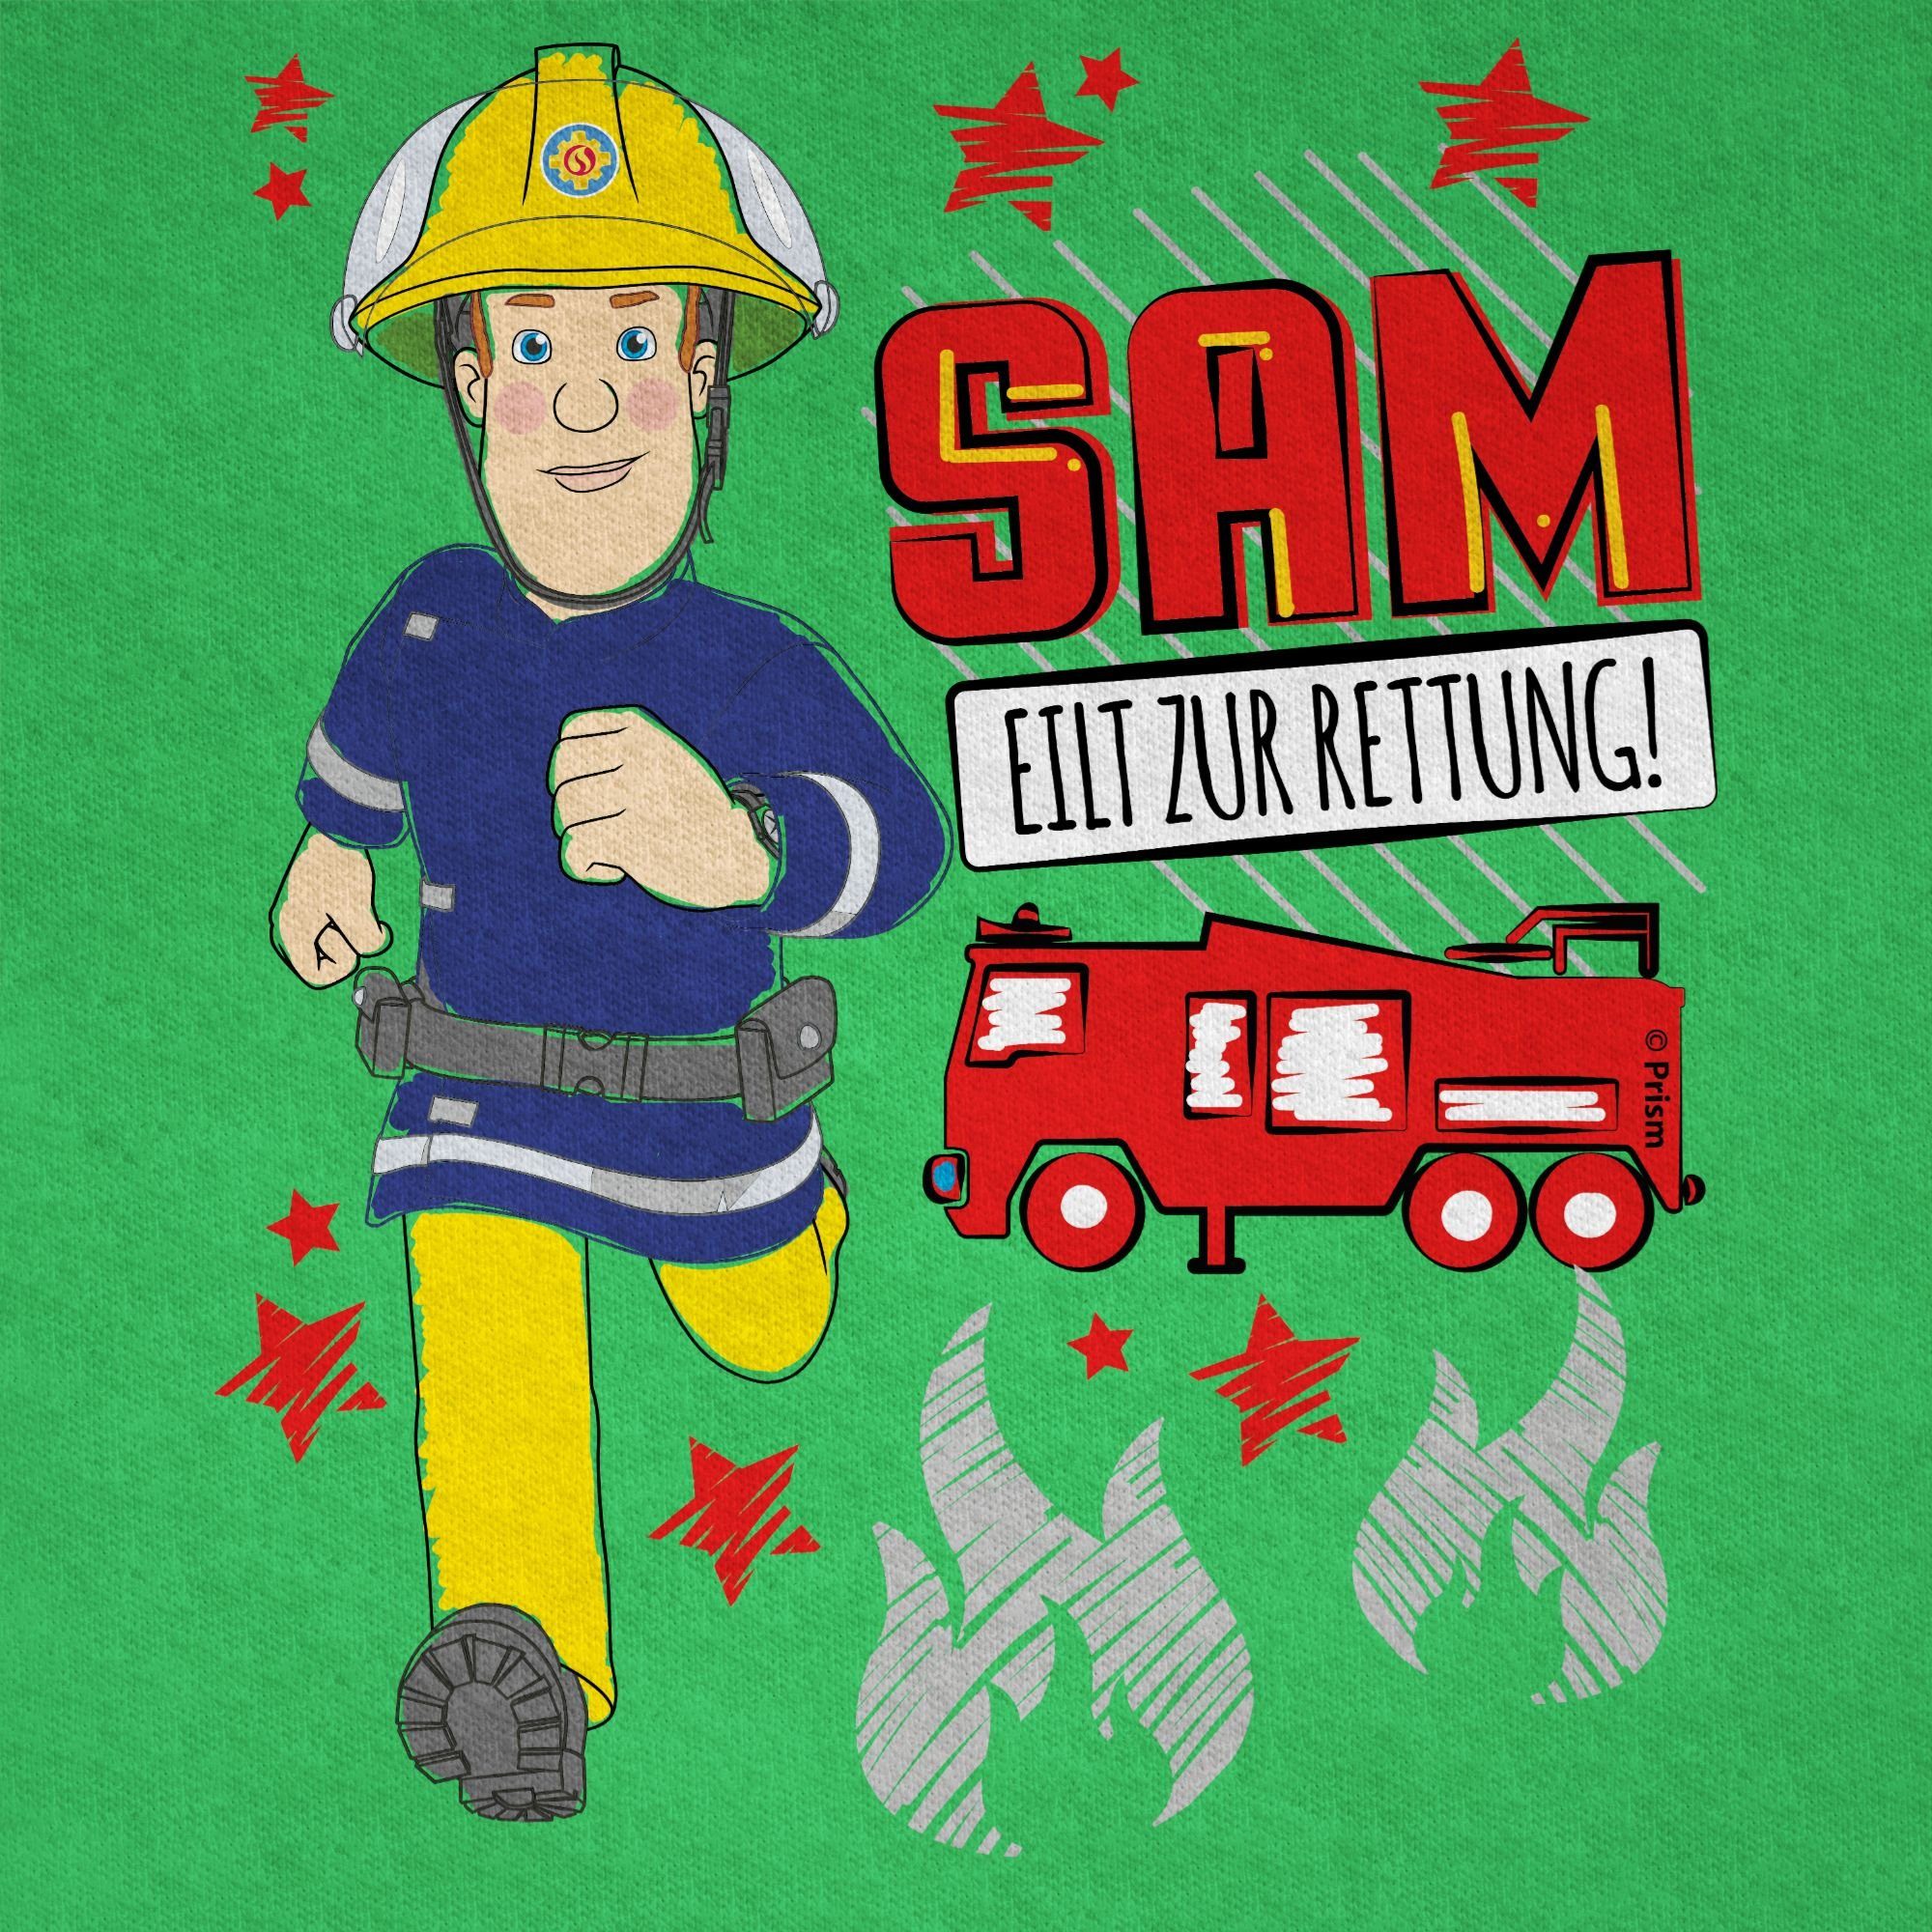 Sam Grün Feuerwehrmann Sam Rettung zur 03 Shirtracer T-Shirt eilt Jungen